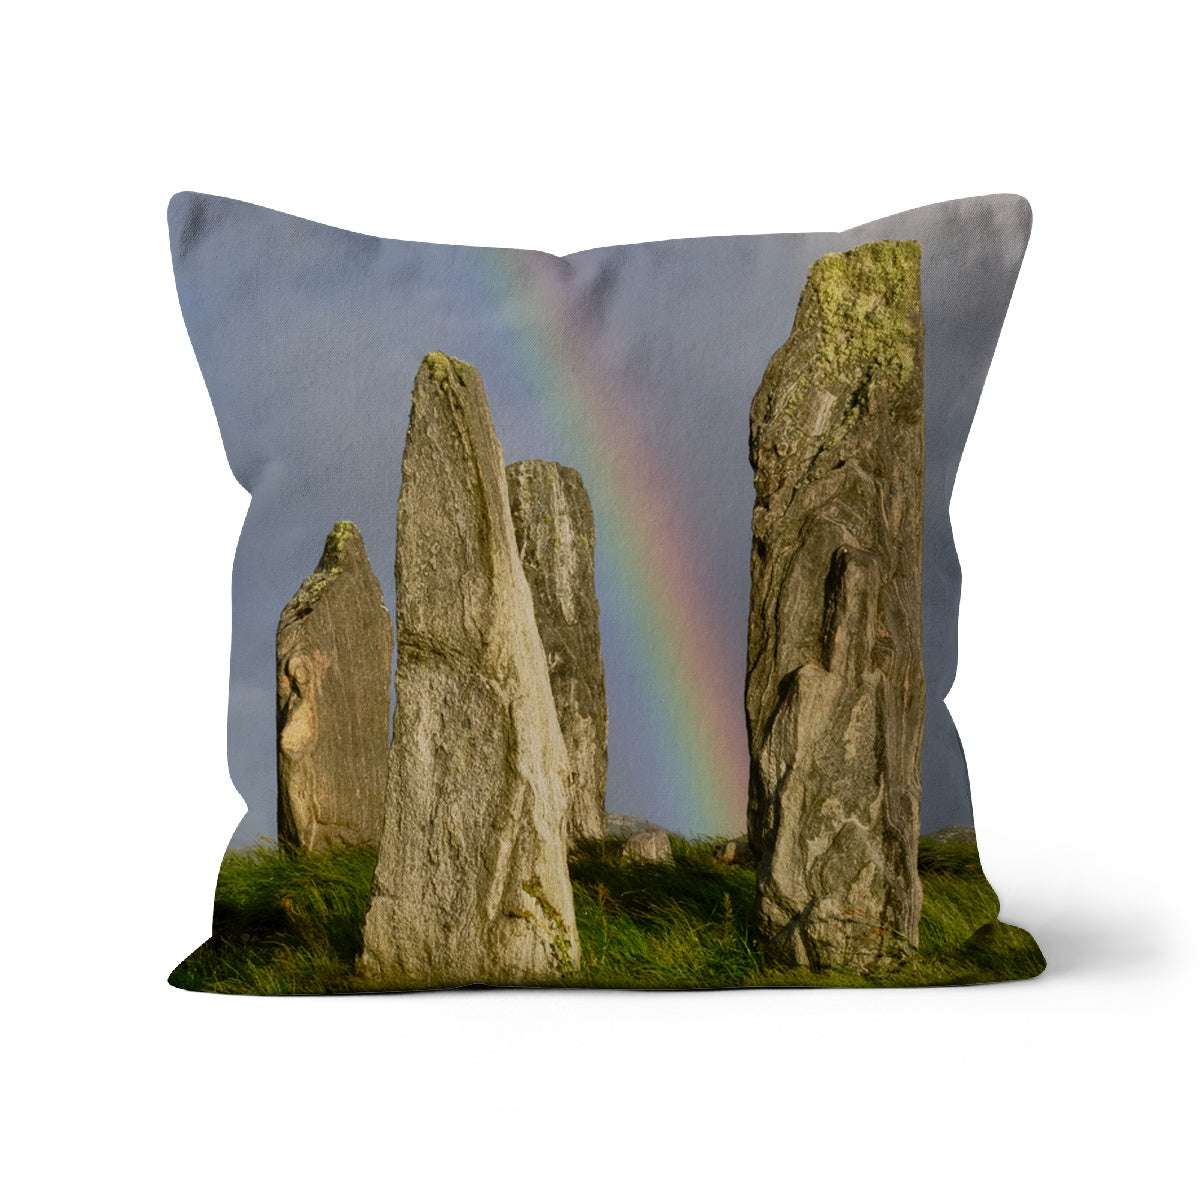 Callanish and Rainbow Cushion